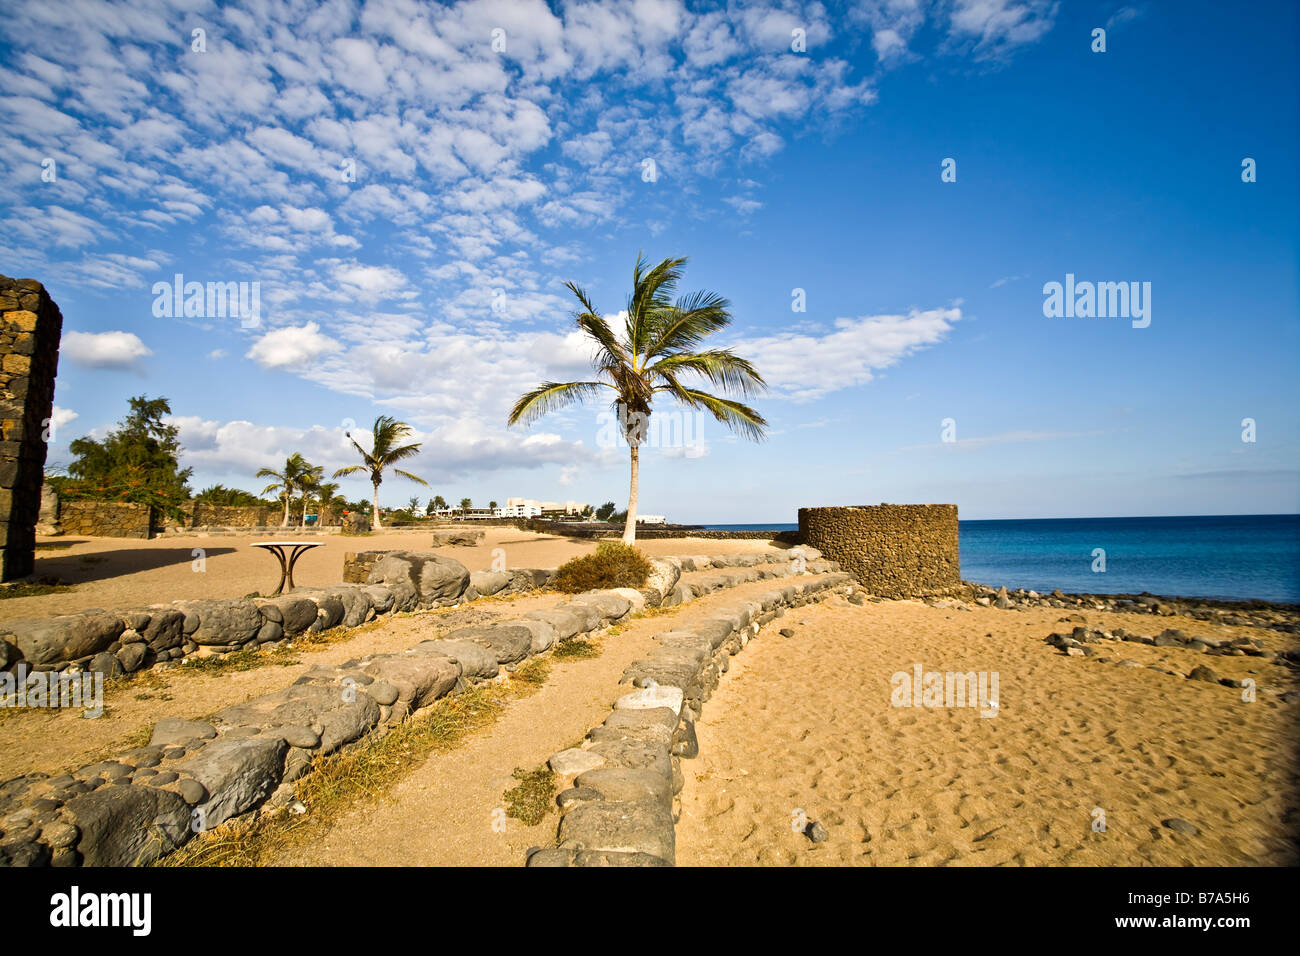 Playa Bastian Costa Teguise Lanzarote Iles Canaries Espagne Europe plage tourisme voyage Banque D'Images